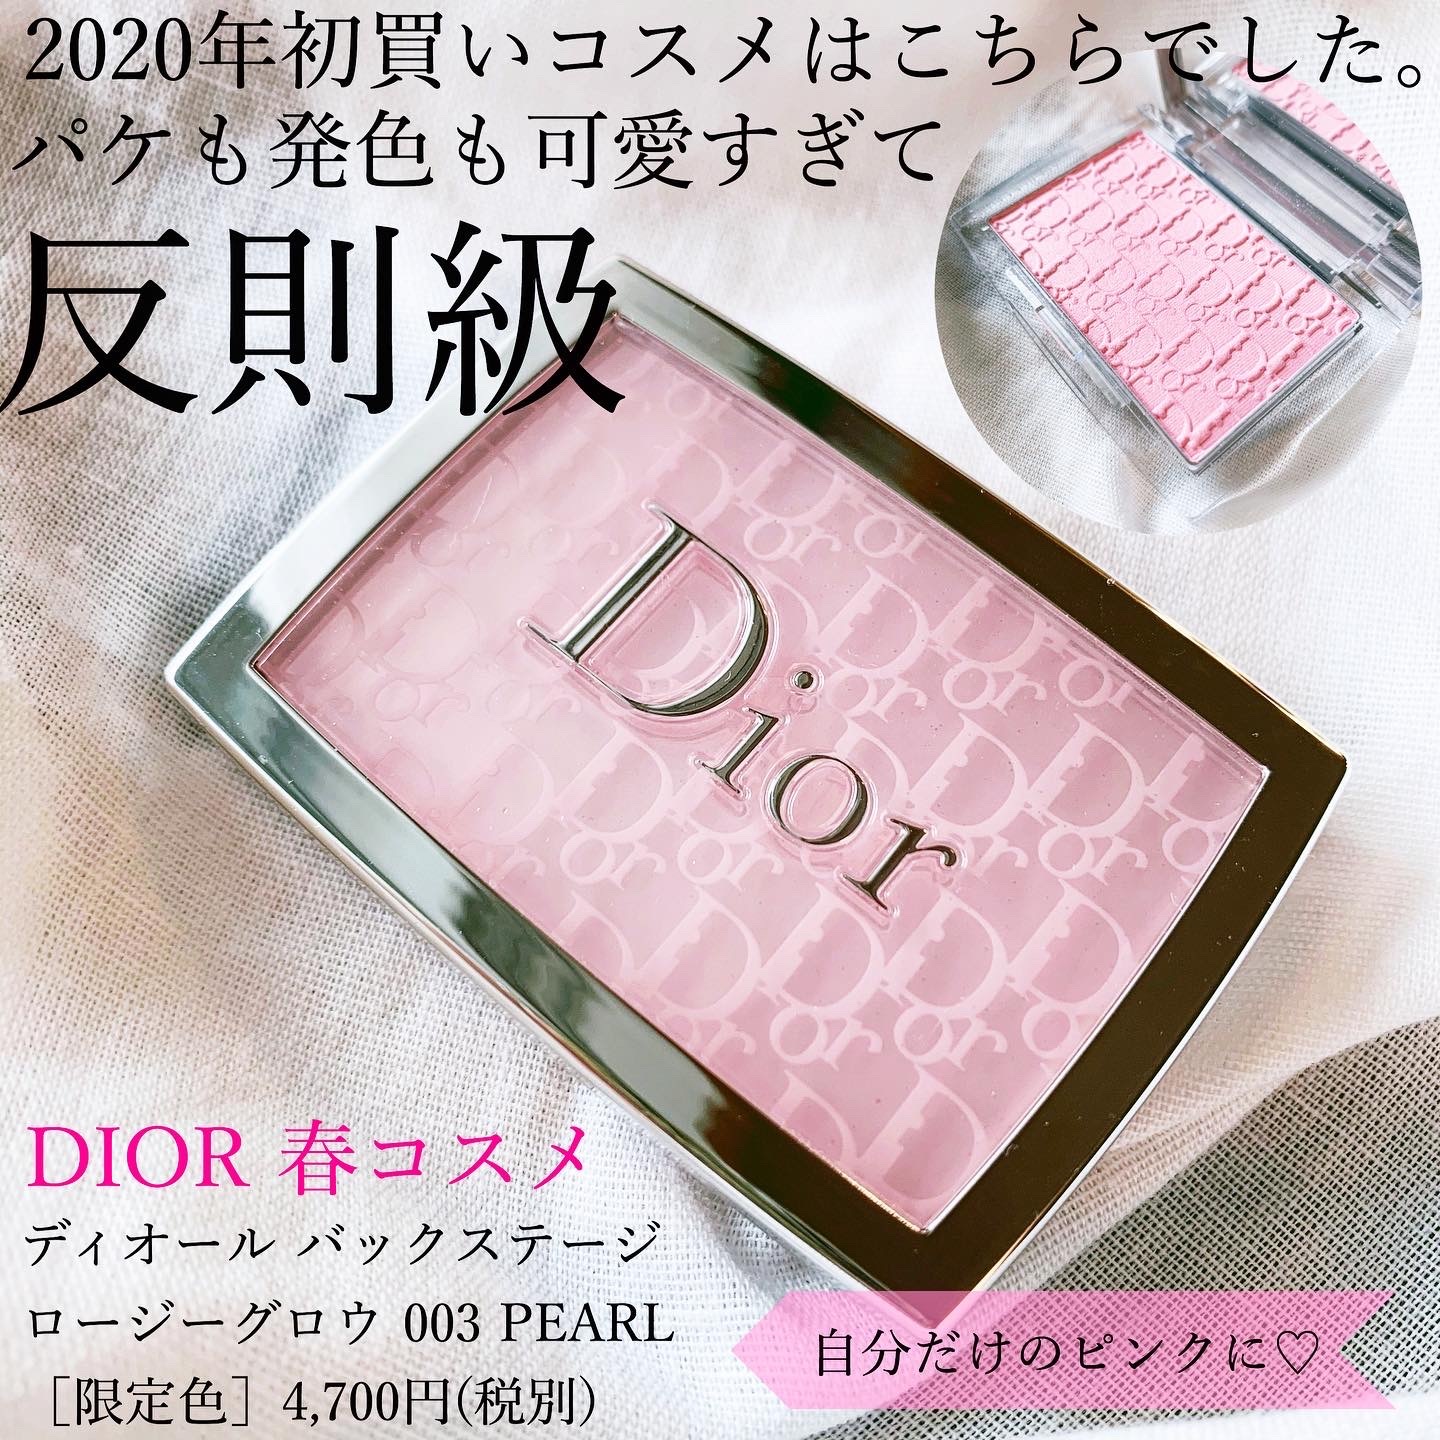 Dior ディオールバックステージ ロージーグロウ